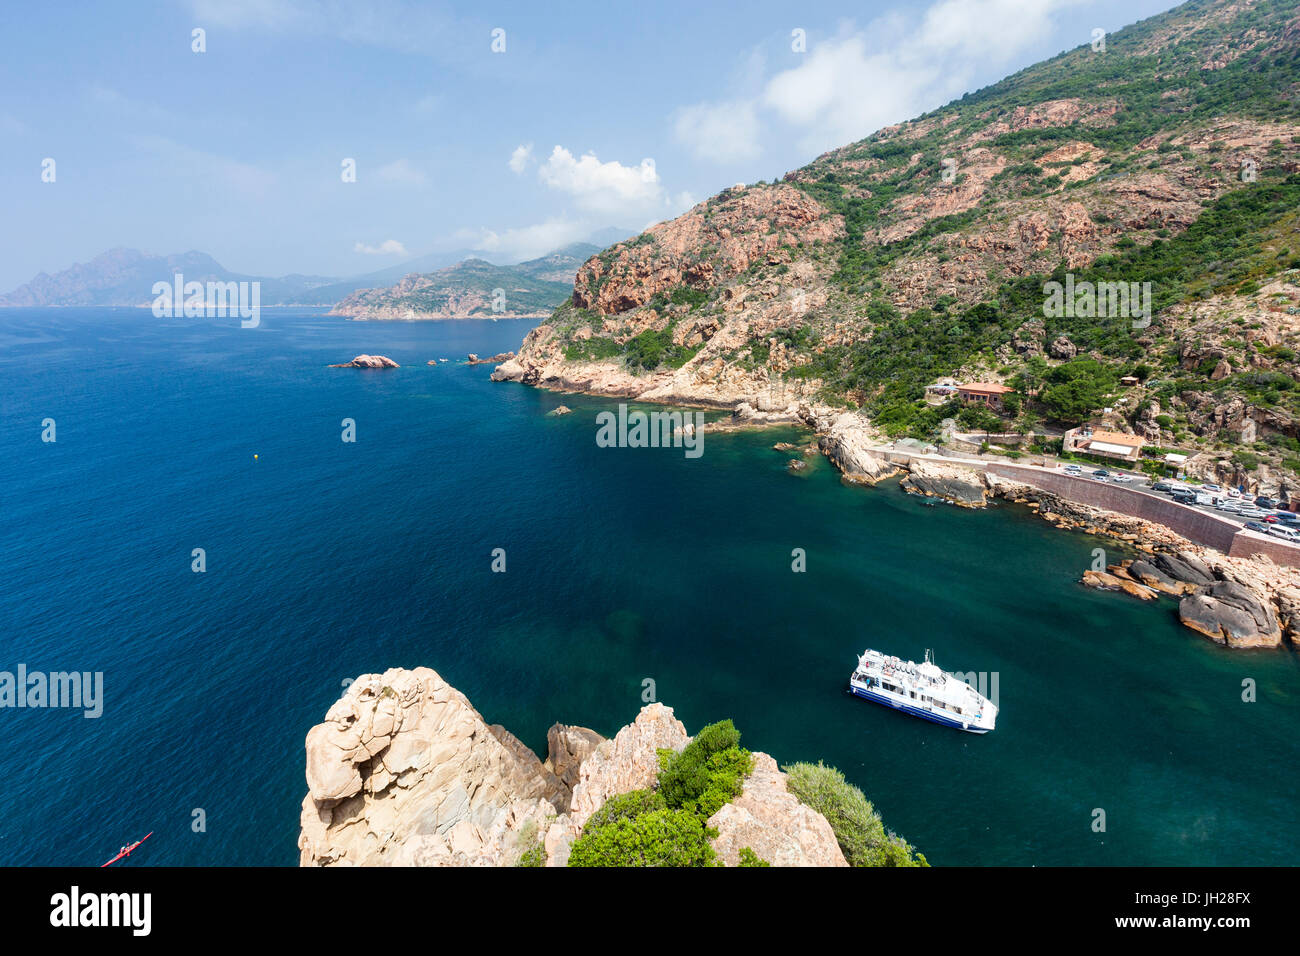 Touristenboot im türkisfarbenen Meer umrahmt von Kalksteinfelsen, Porto, Korsika, Südfrankreich, Mittelmeer, Europa Stockfoto